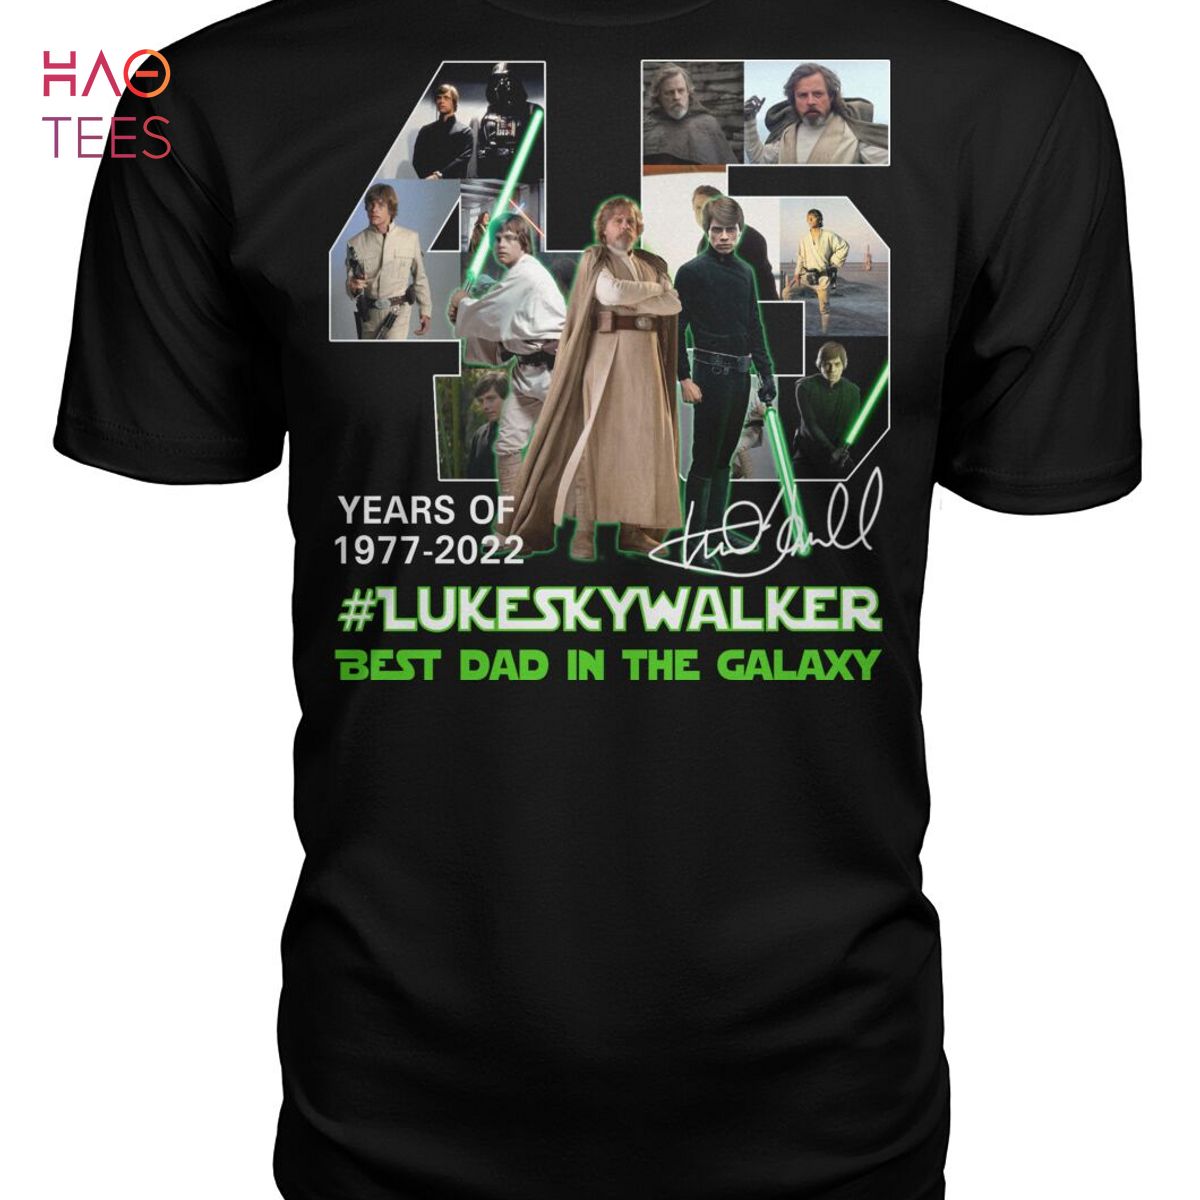 Year Of 1977-2022 Lukeskywalker Best Dad In The Galaxy Shirt